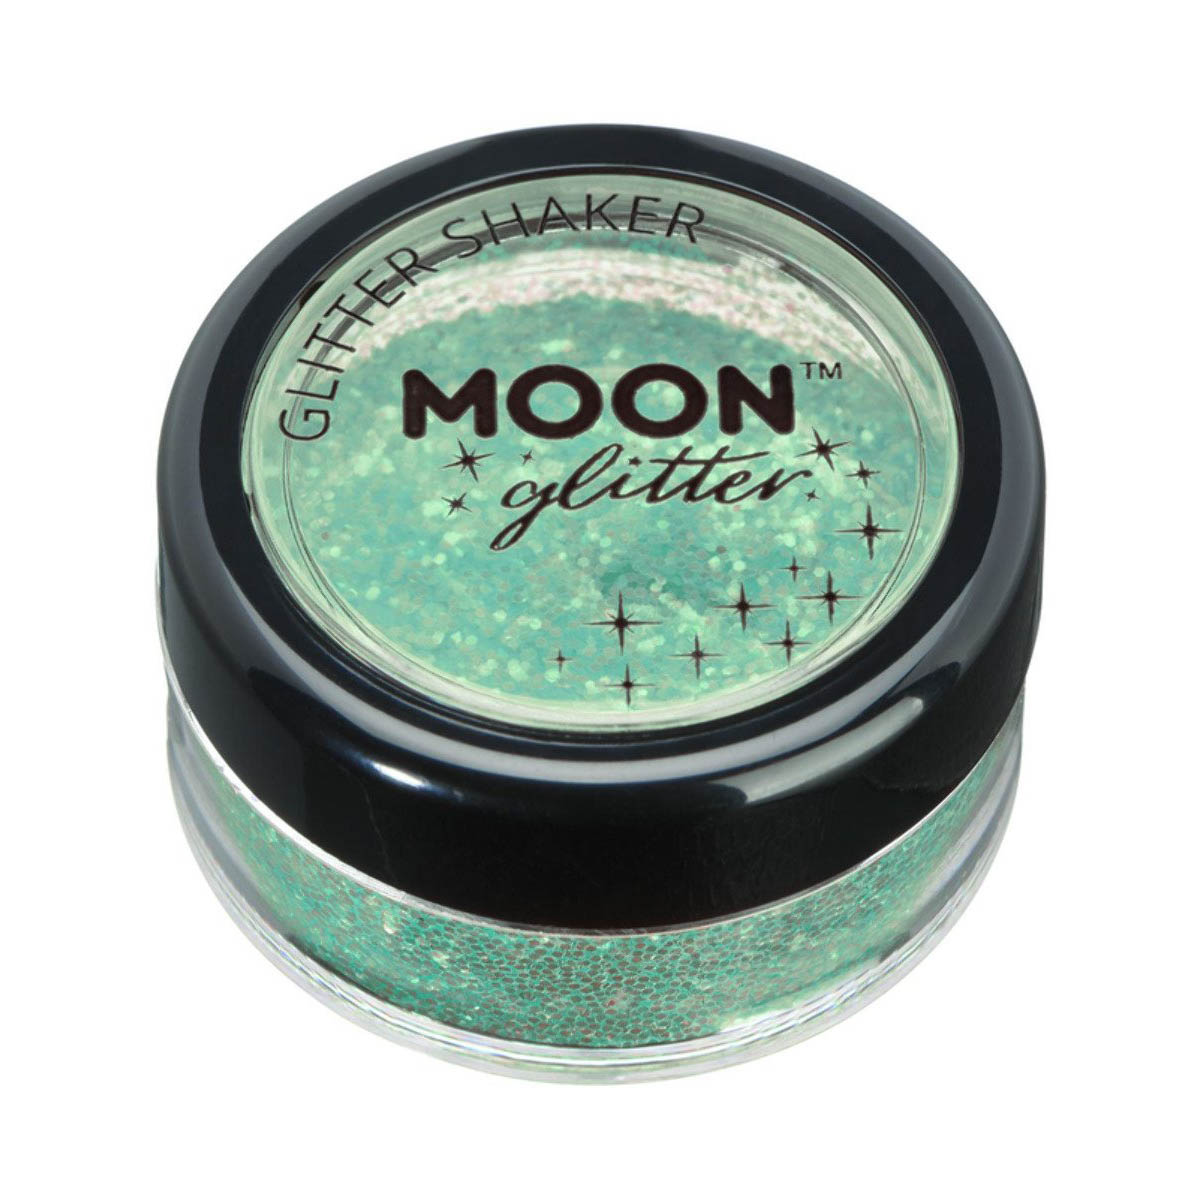 Moon glitter i burk shaker, finkornigt iriserande 5g Grön